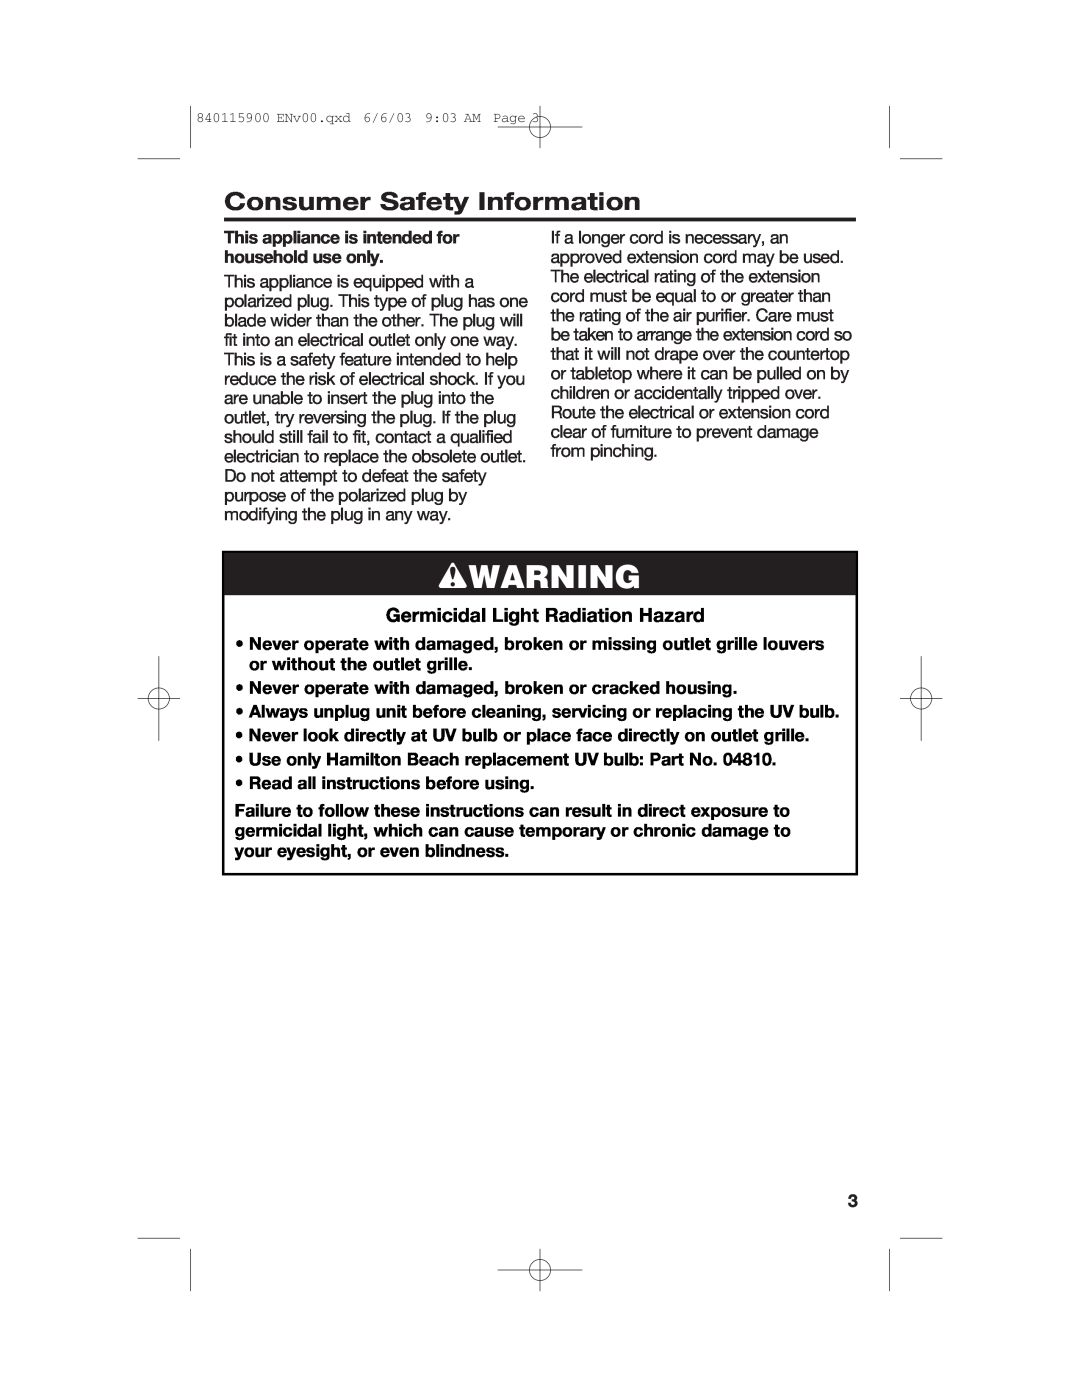 Hamilton Beach 840115900 manual wWARNING, Consumer Safety Information, Germicidal Light Radiation Hazard 